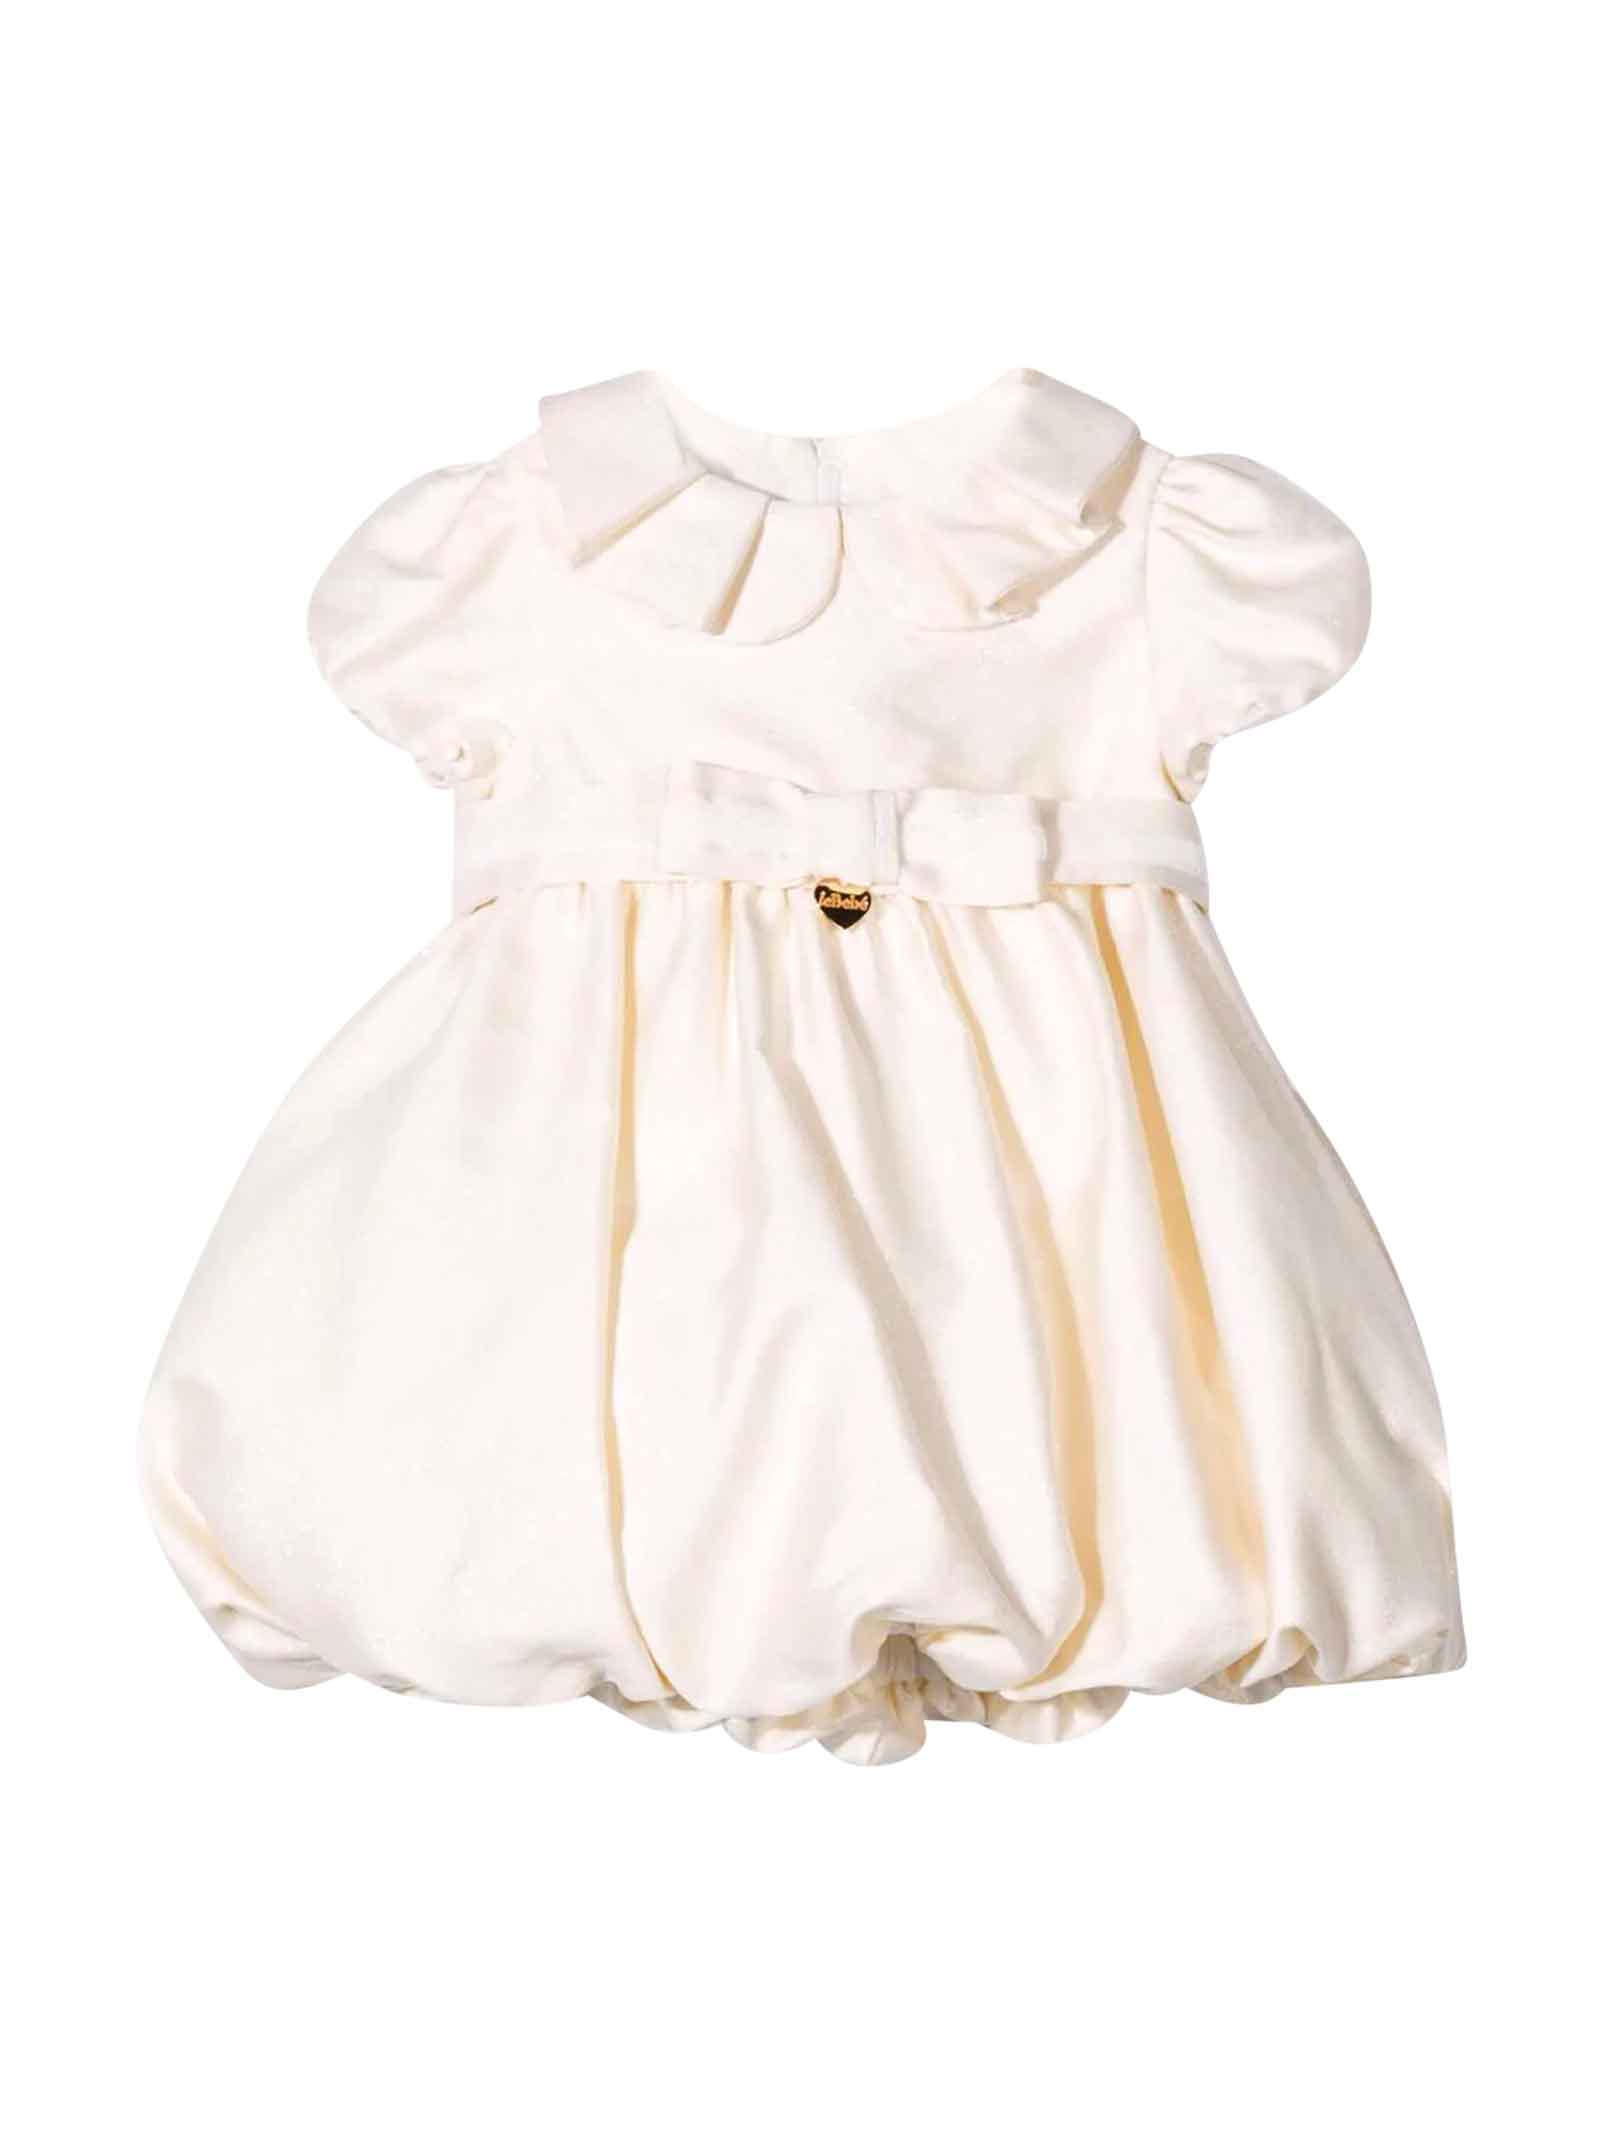 leBebé Le Bebé Enfant Newborn White Dress